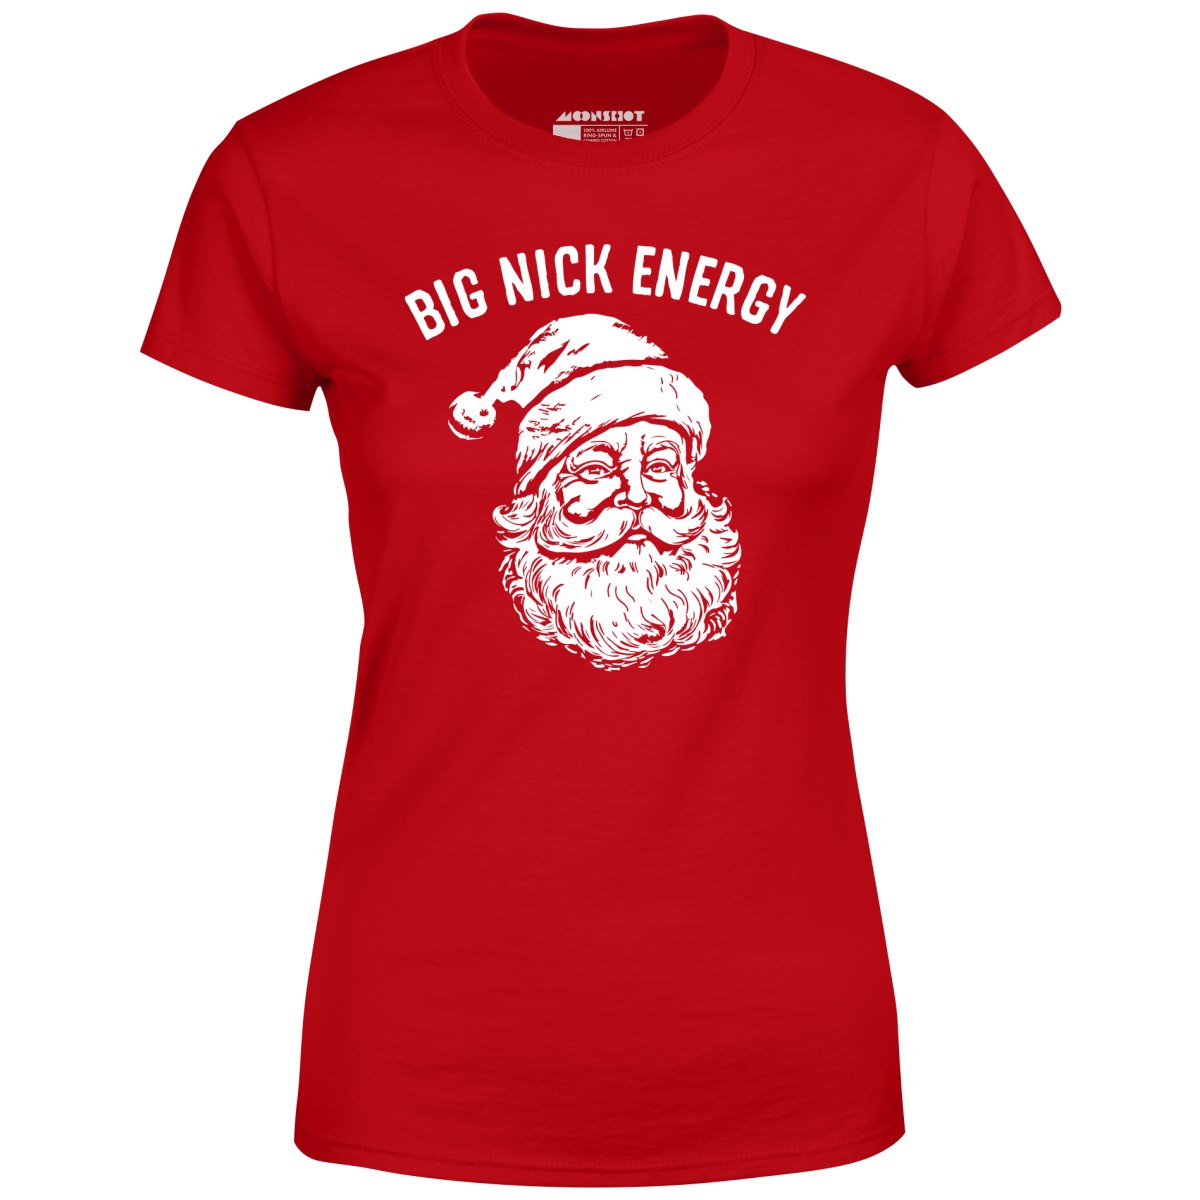 Big Nick Energy - Women's T-Shirt